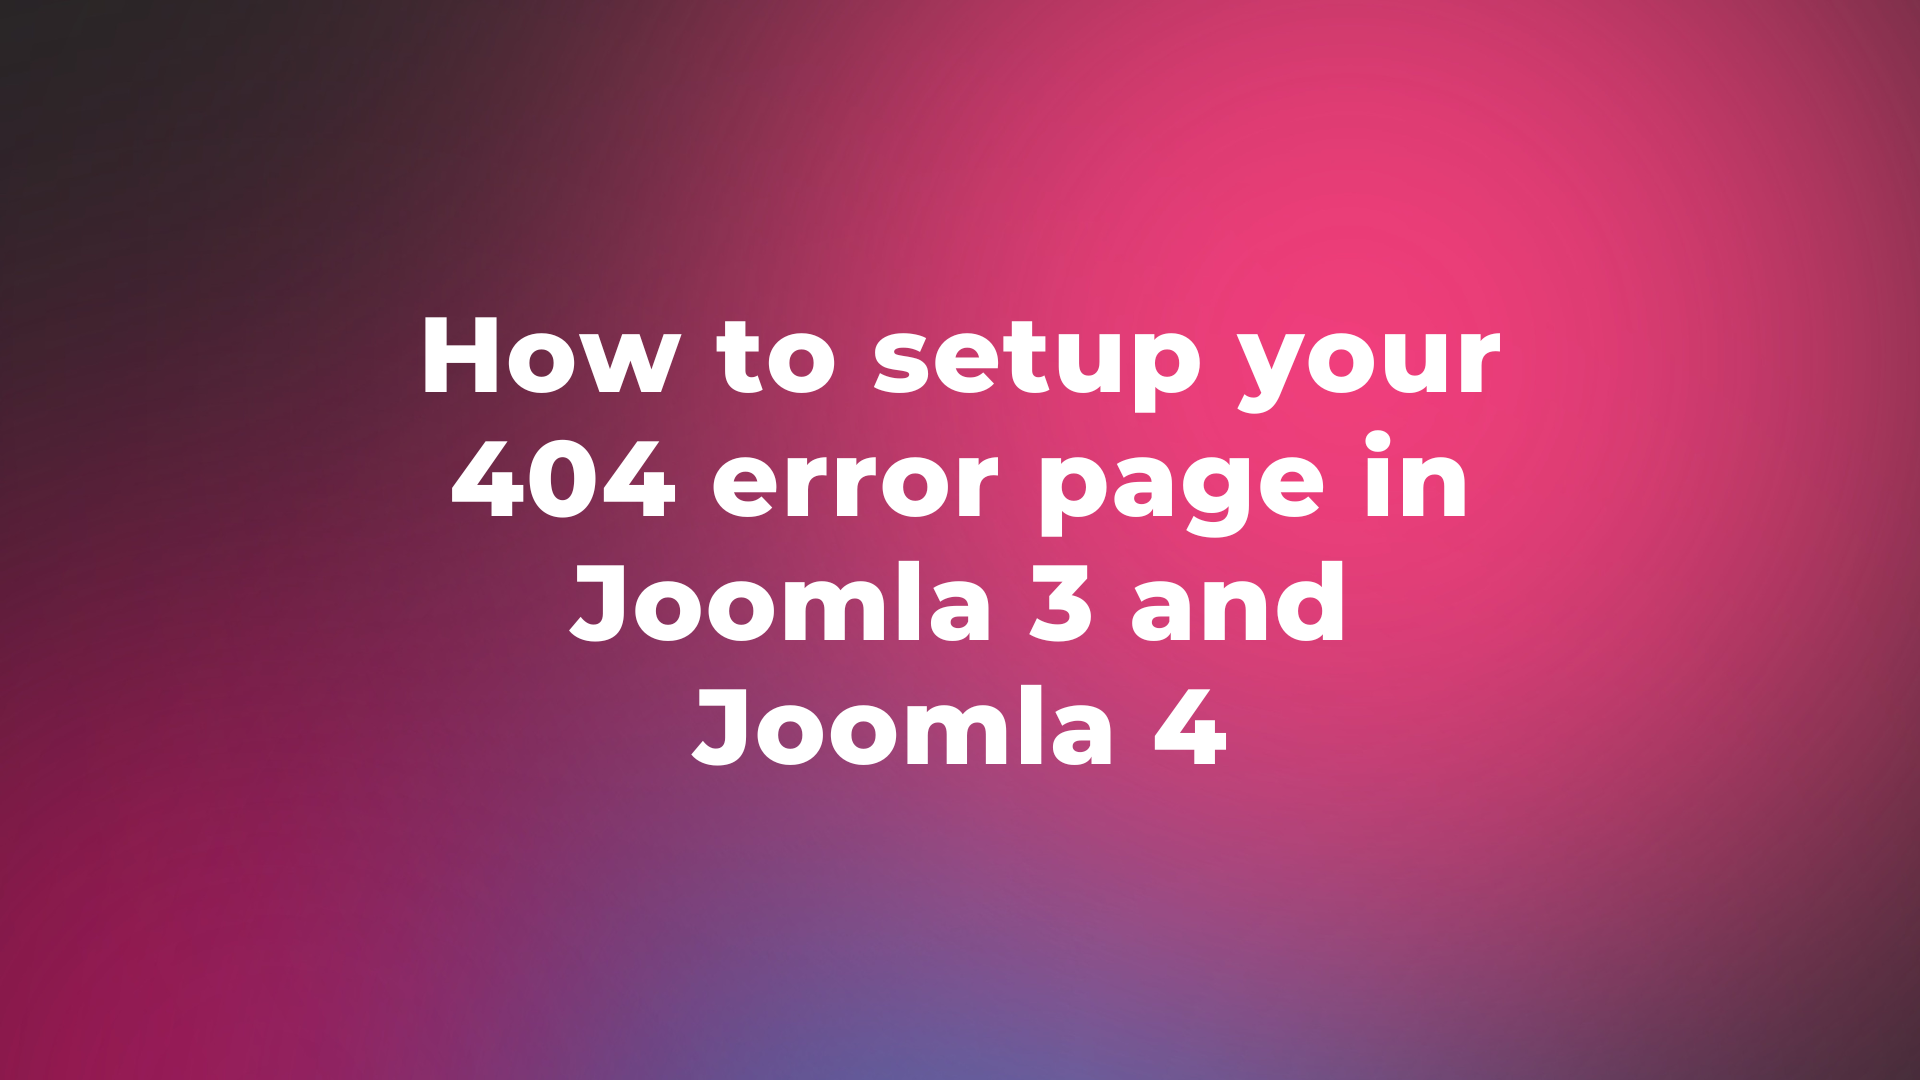 ordasoft Joomla News: How to setup your 404 error page in Joomla 3 and Joomla 4